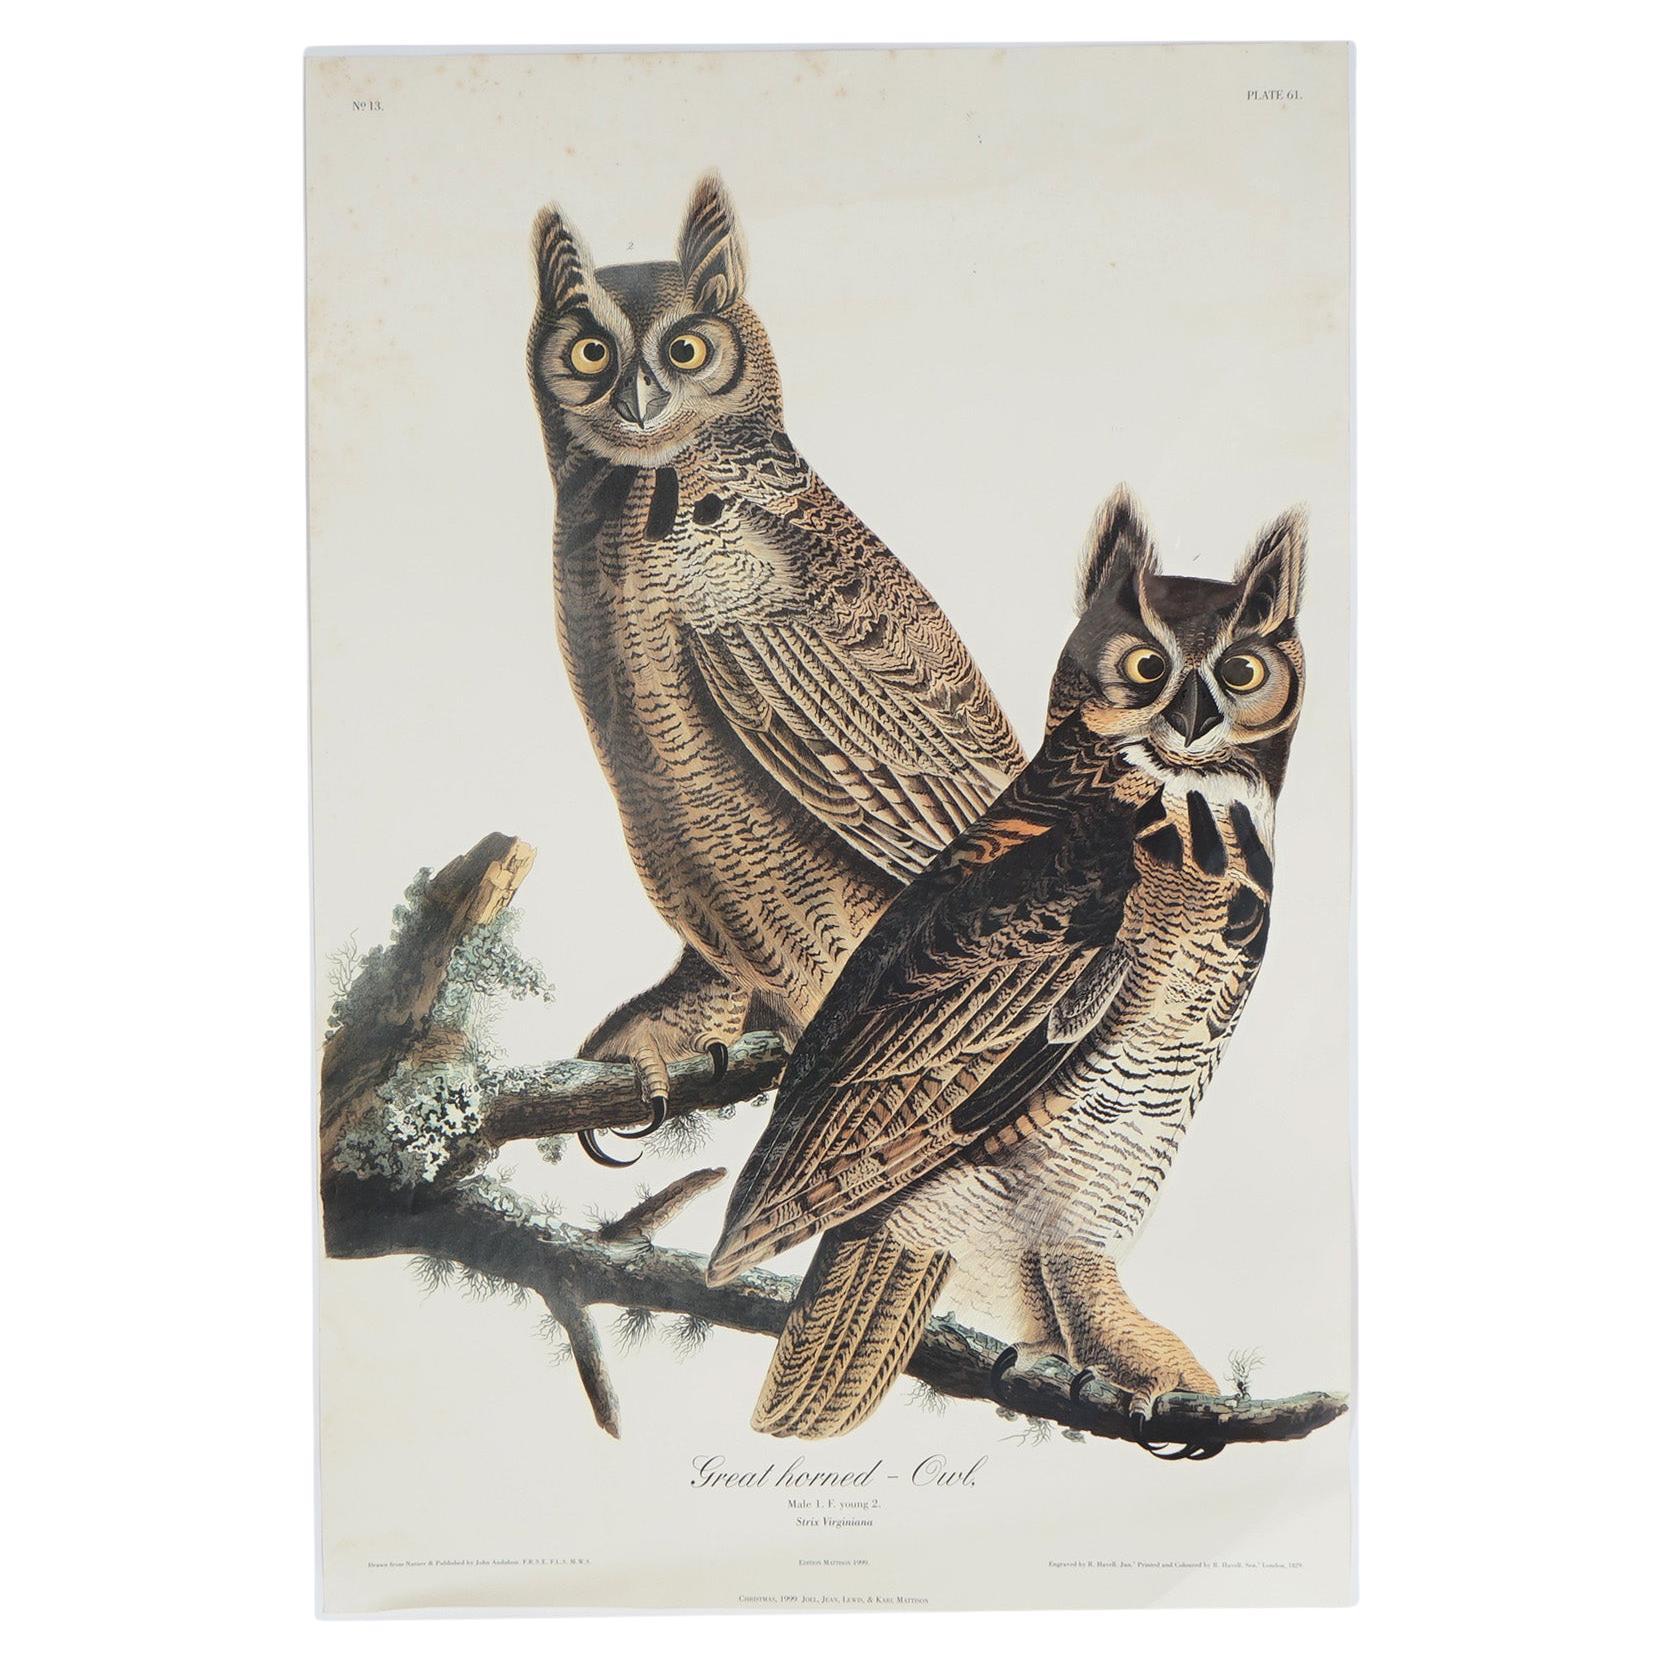 R. Havell Double Elephant Folio Audubon Druck von Great Horned Owls C1999 im Angebot